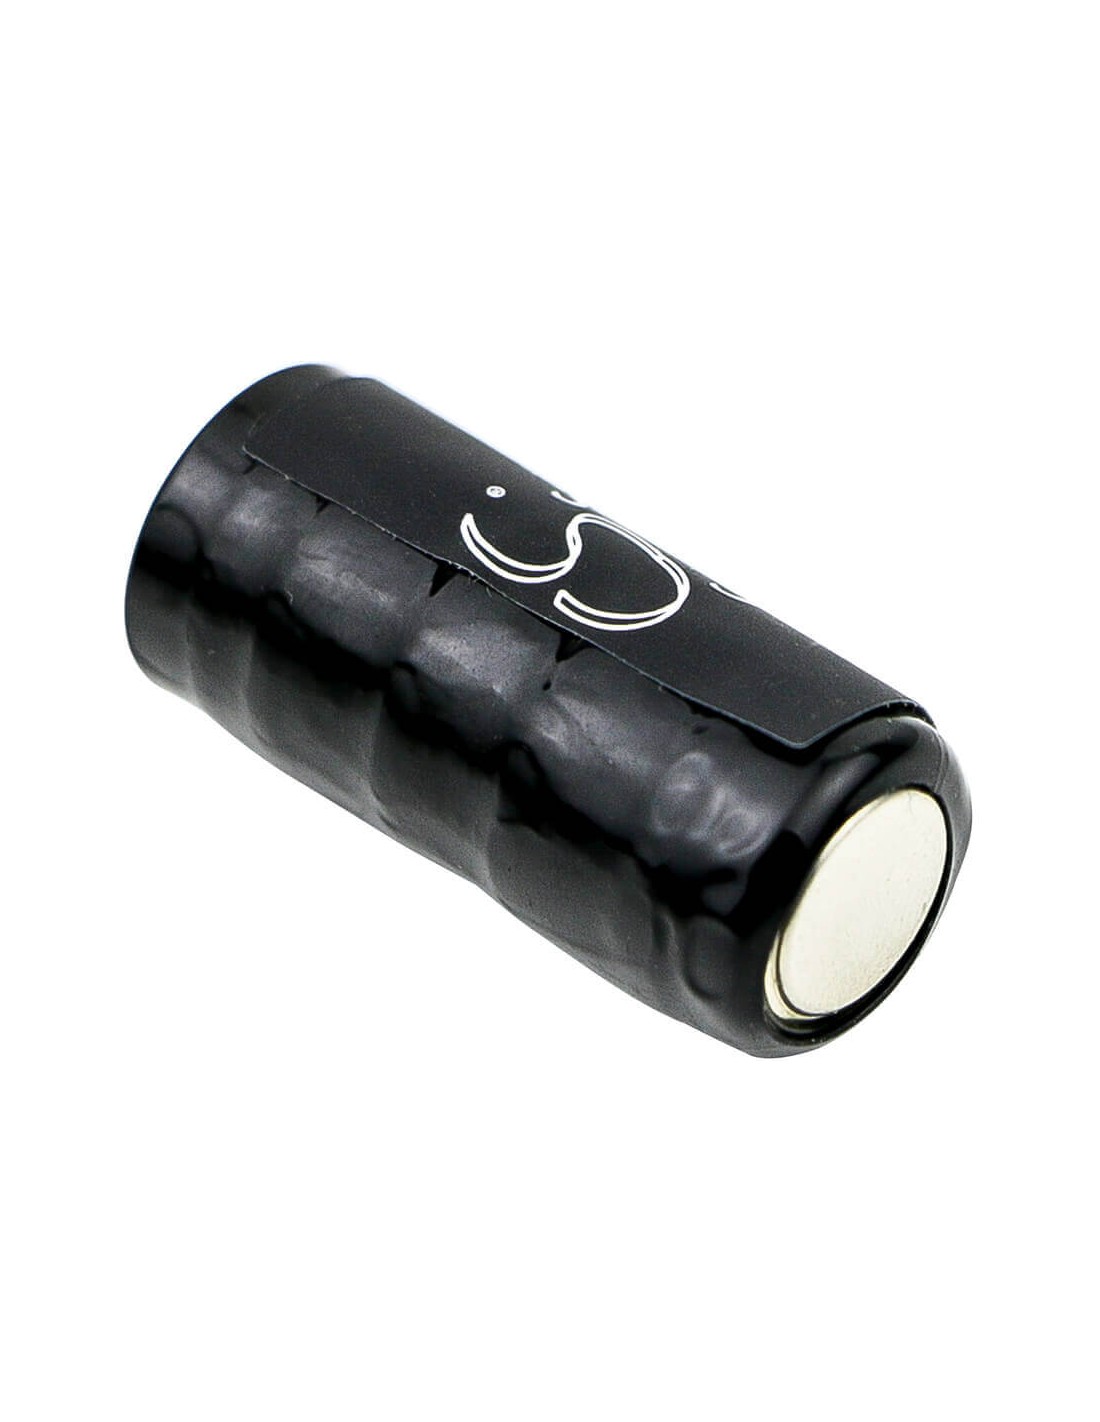 Battery for Petstop Ot200 Dog Fencing Collar, Pst06 7.5V, 160mAh - 1.20Wh